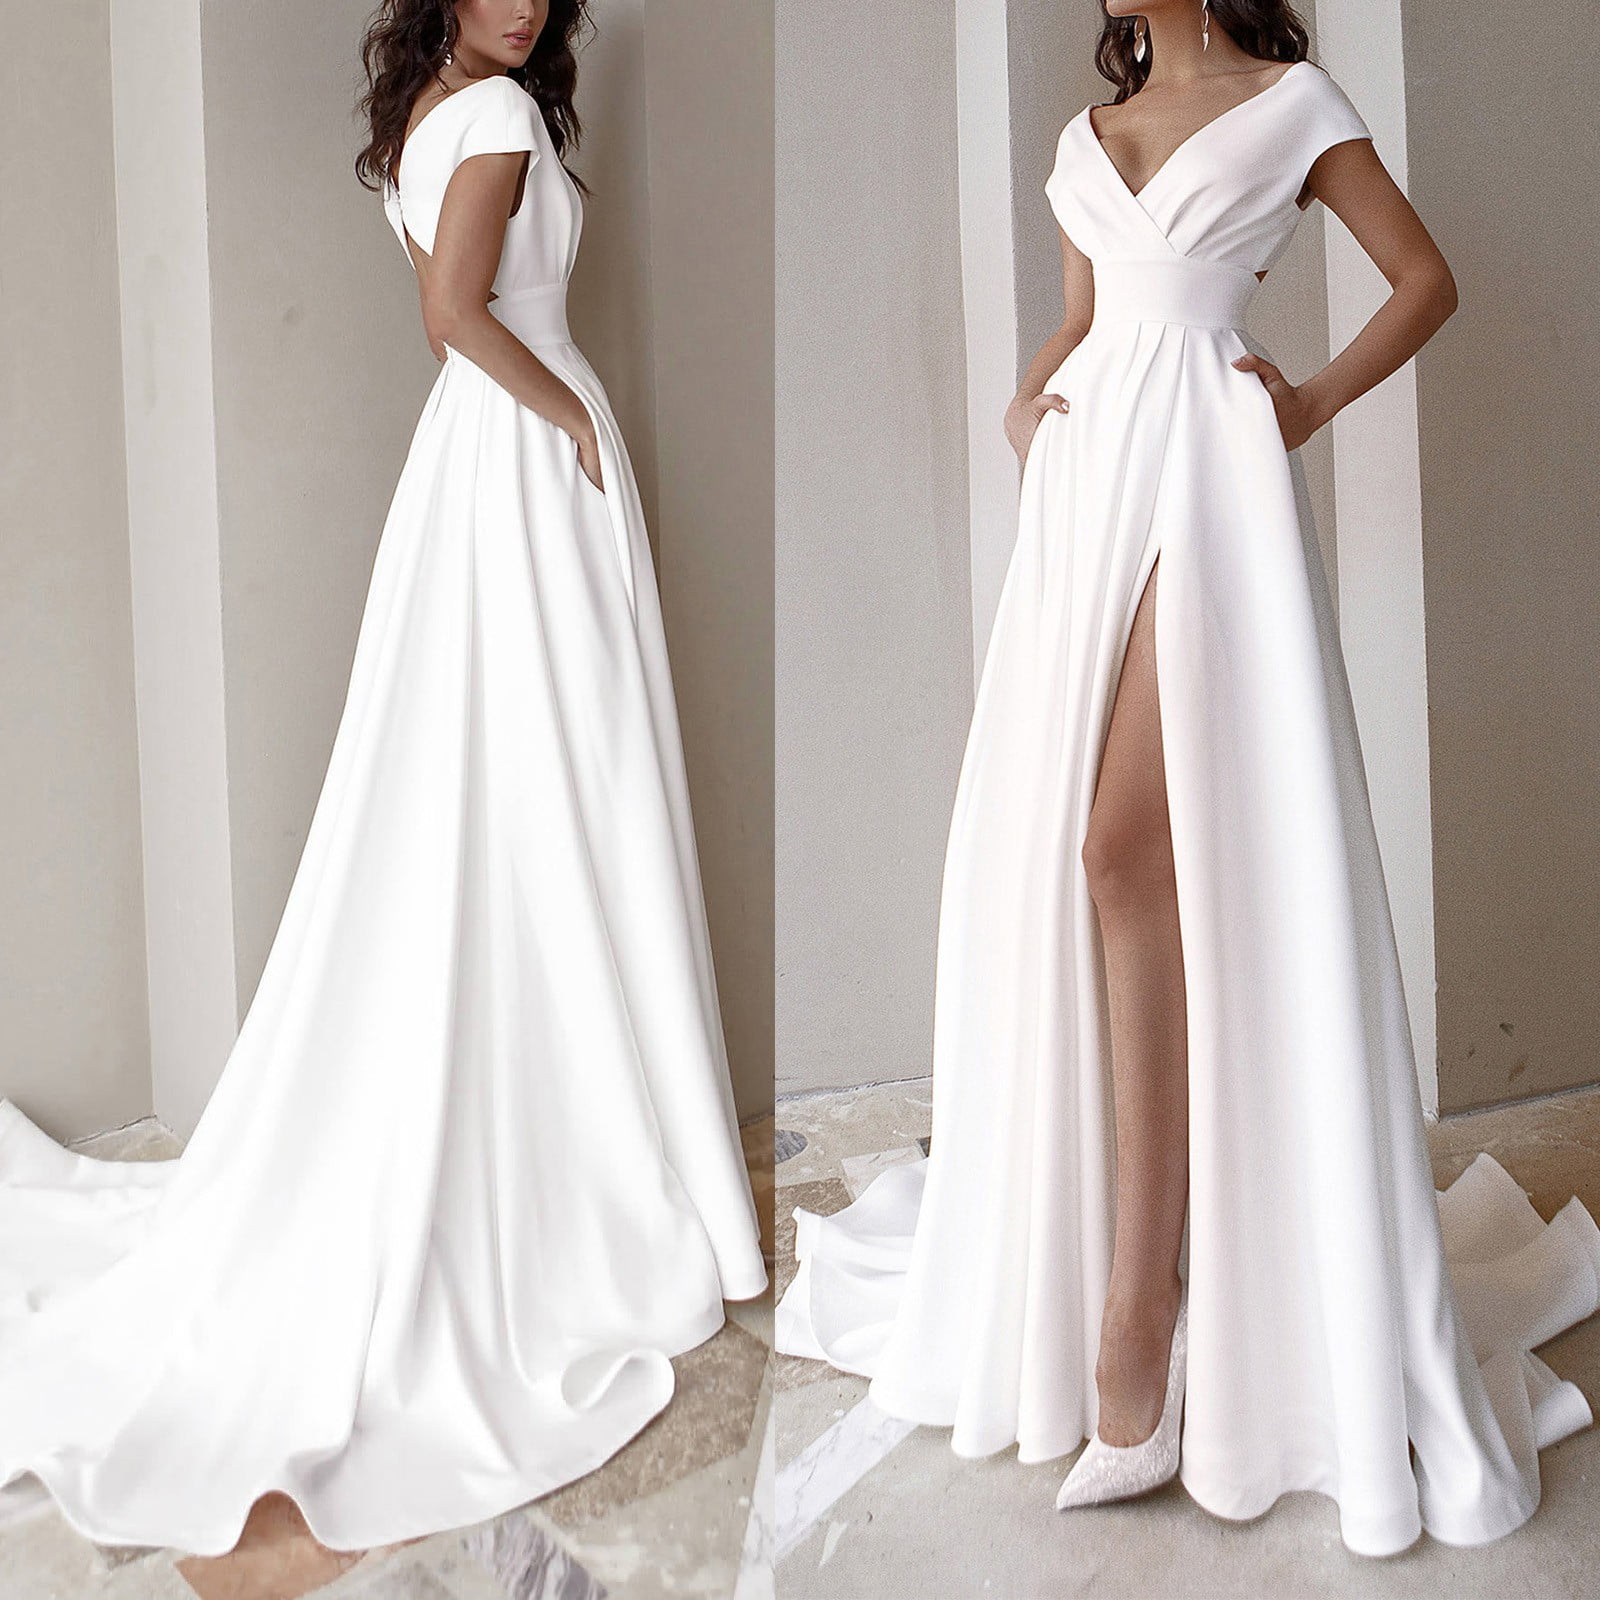 Women S Short Wedding White Dress Evening Backless Dresses Prom Cocktail  Party | eBay